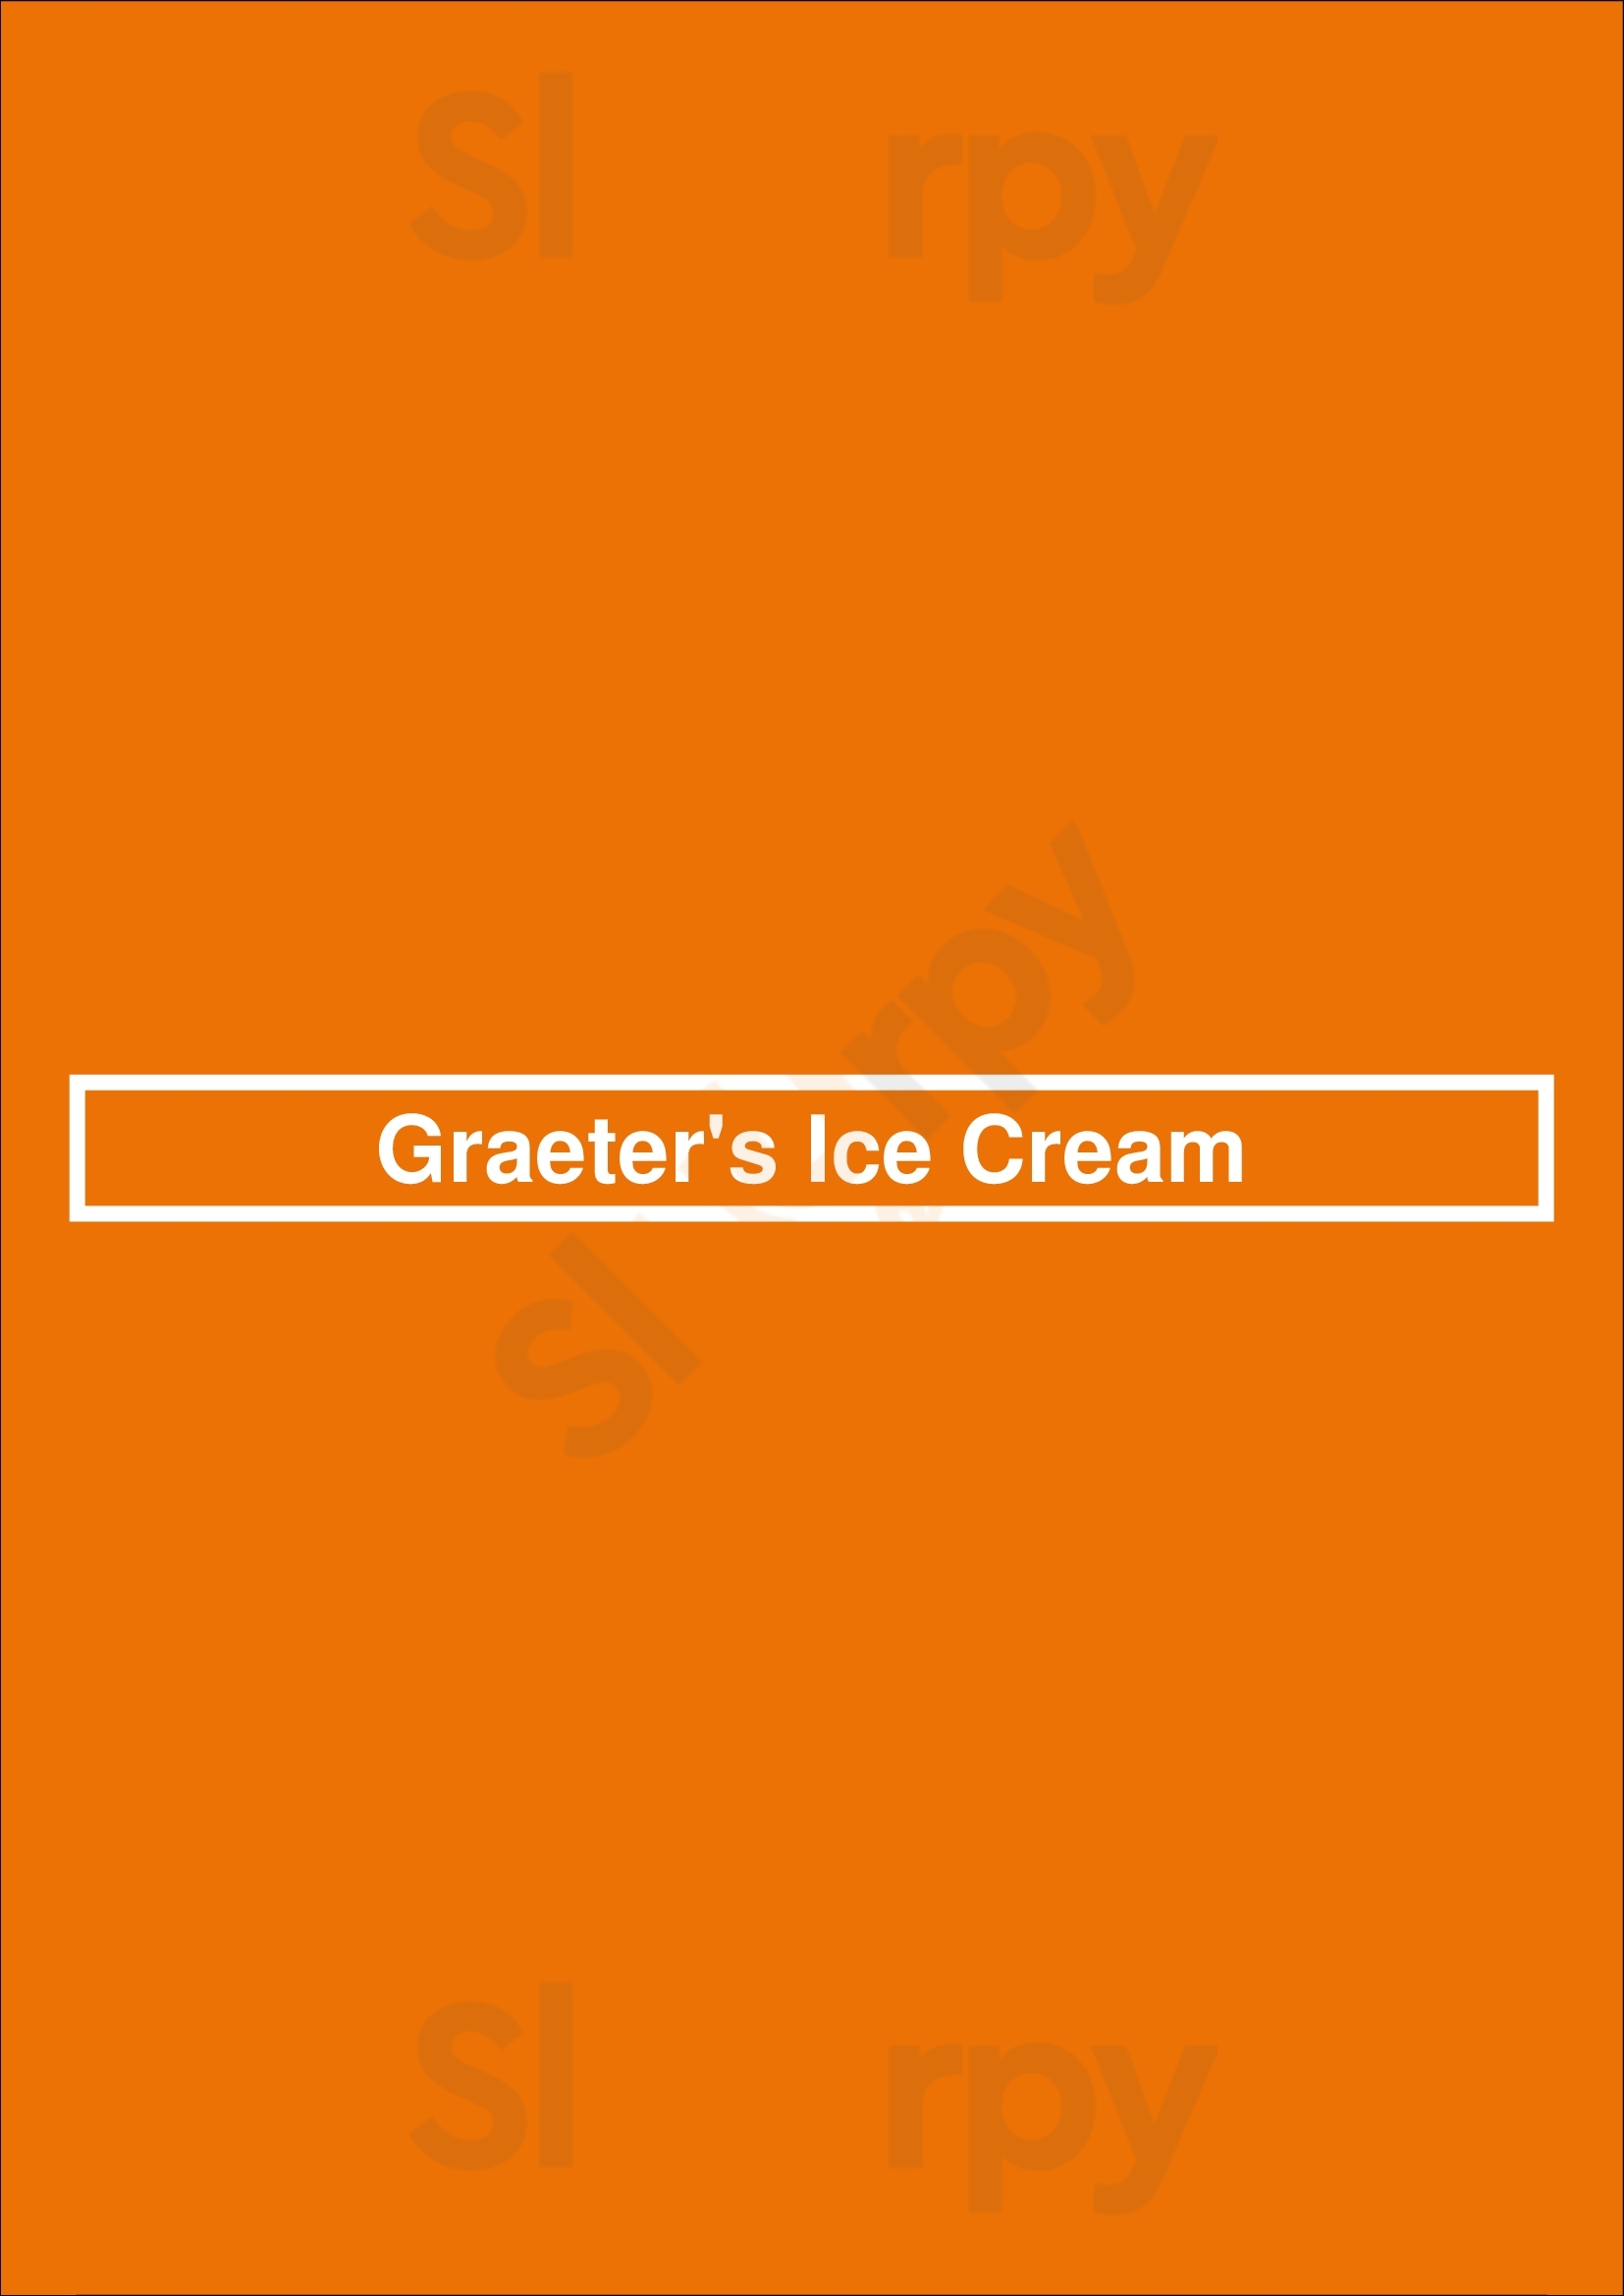 Graeter's Ice Cream Pittsburgh Menu - 1